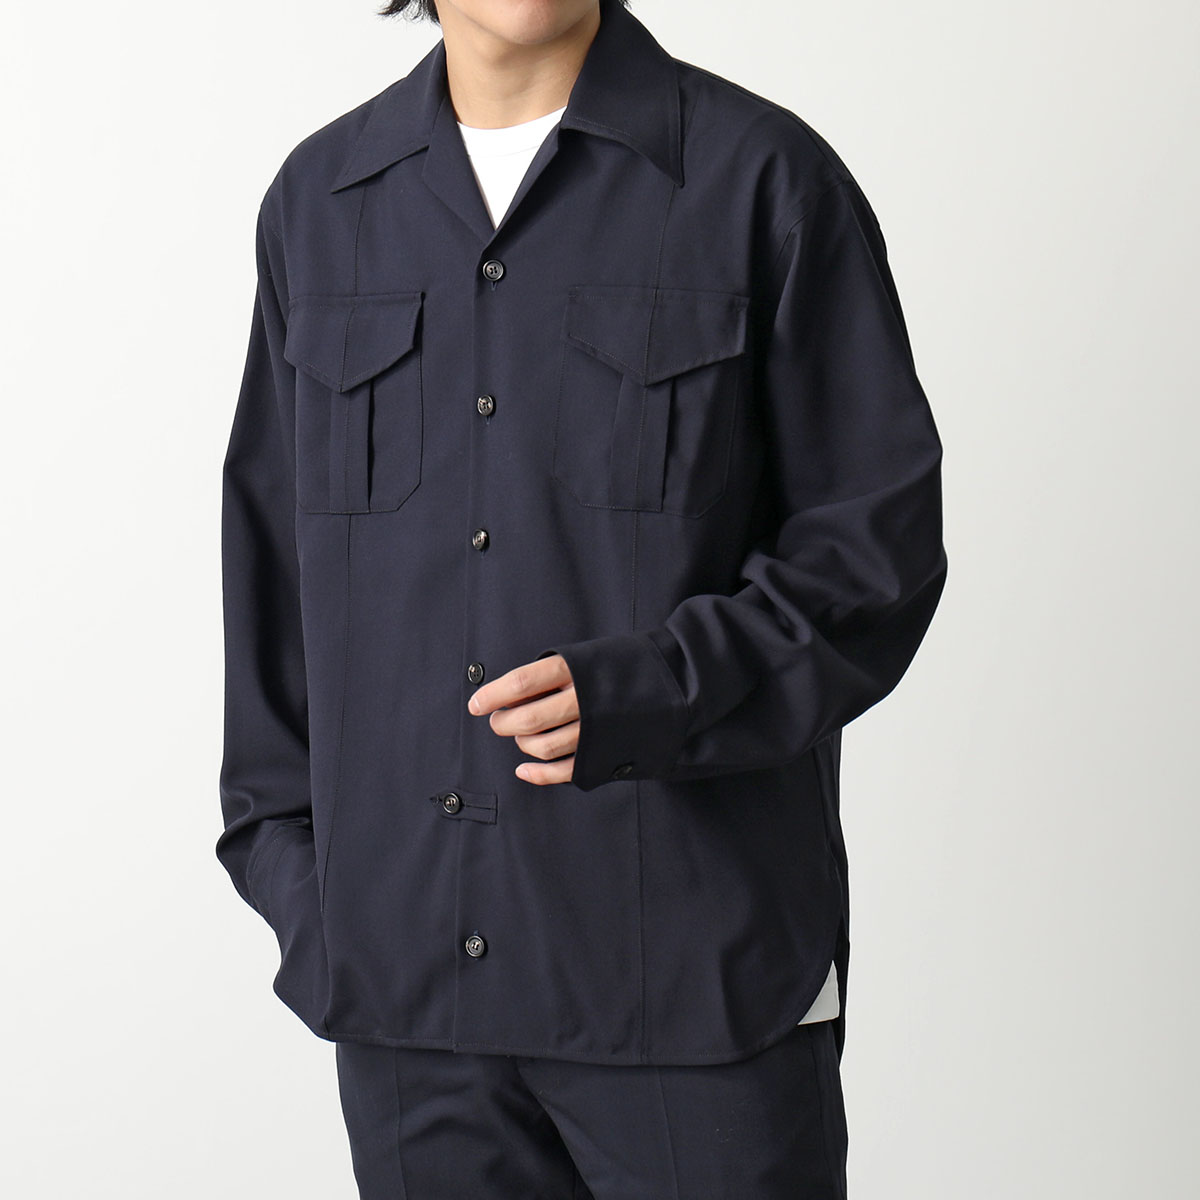 MARNI マルニ シャツ CUMU0085A0 S45455 メンズ 長袖 ウール 胸ポケット カラー2色